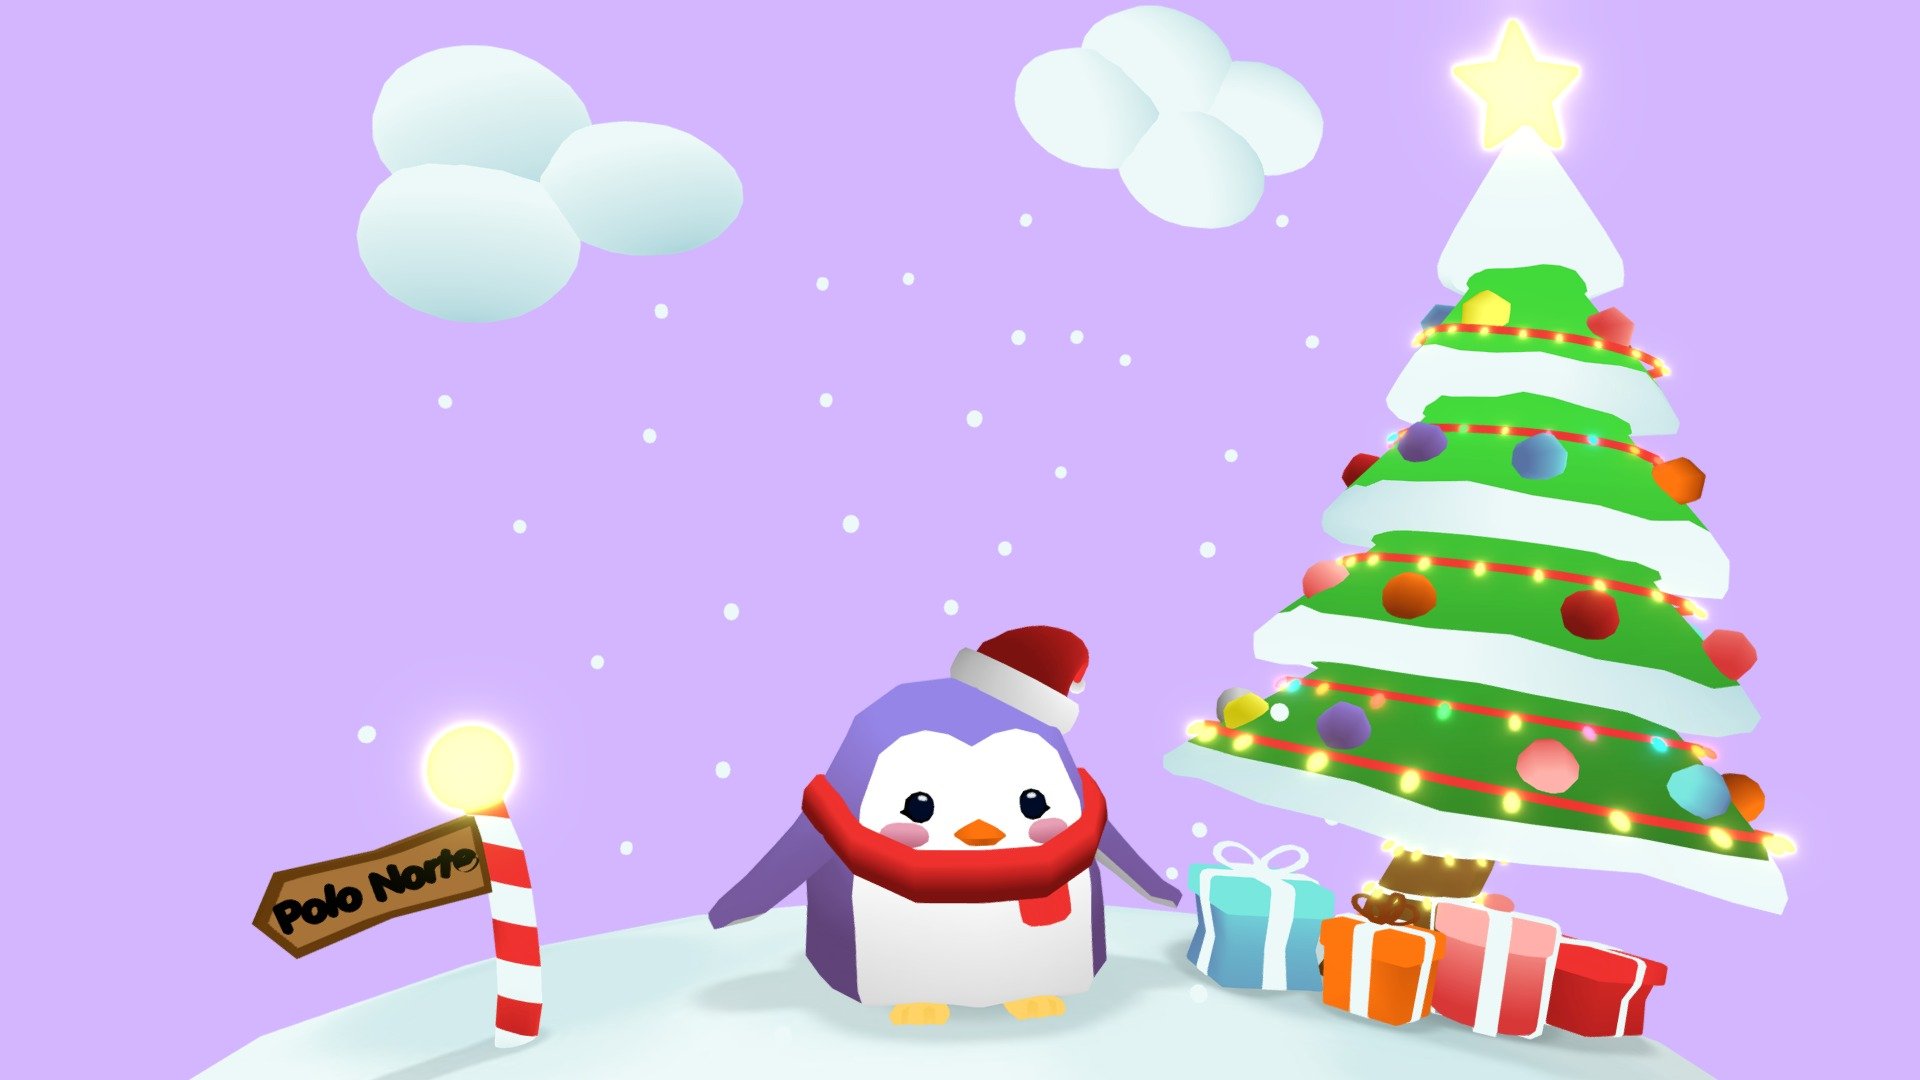 The Penguin Christmas